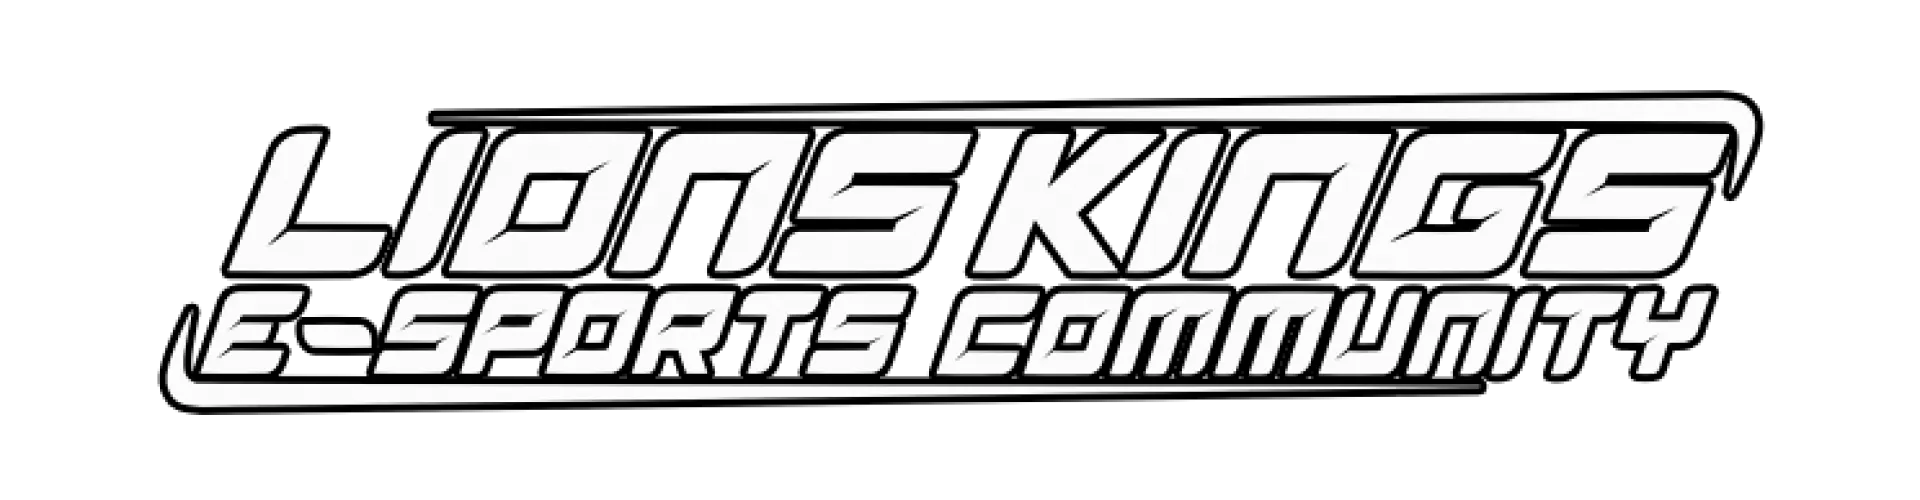 Lions Kings E-Sports Community banner